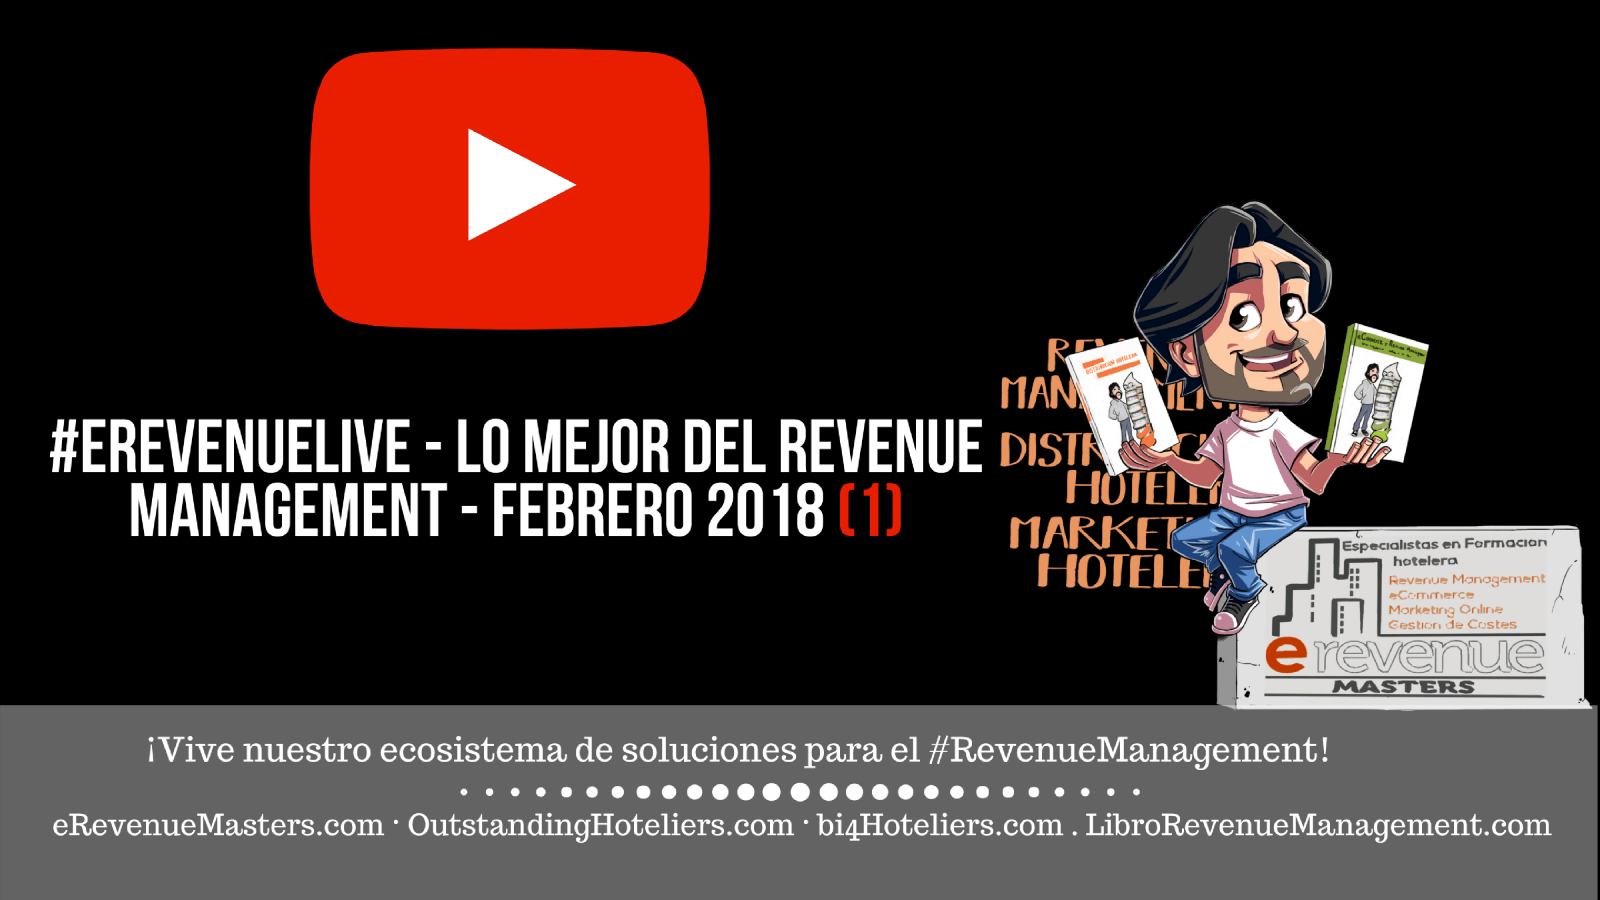 (video & Podcast) #eRevenueLive - Lo mejor del Revenue Management - febrero 2018 (1)